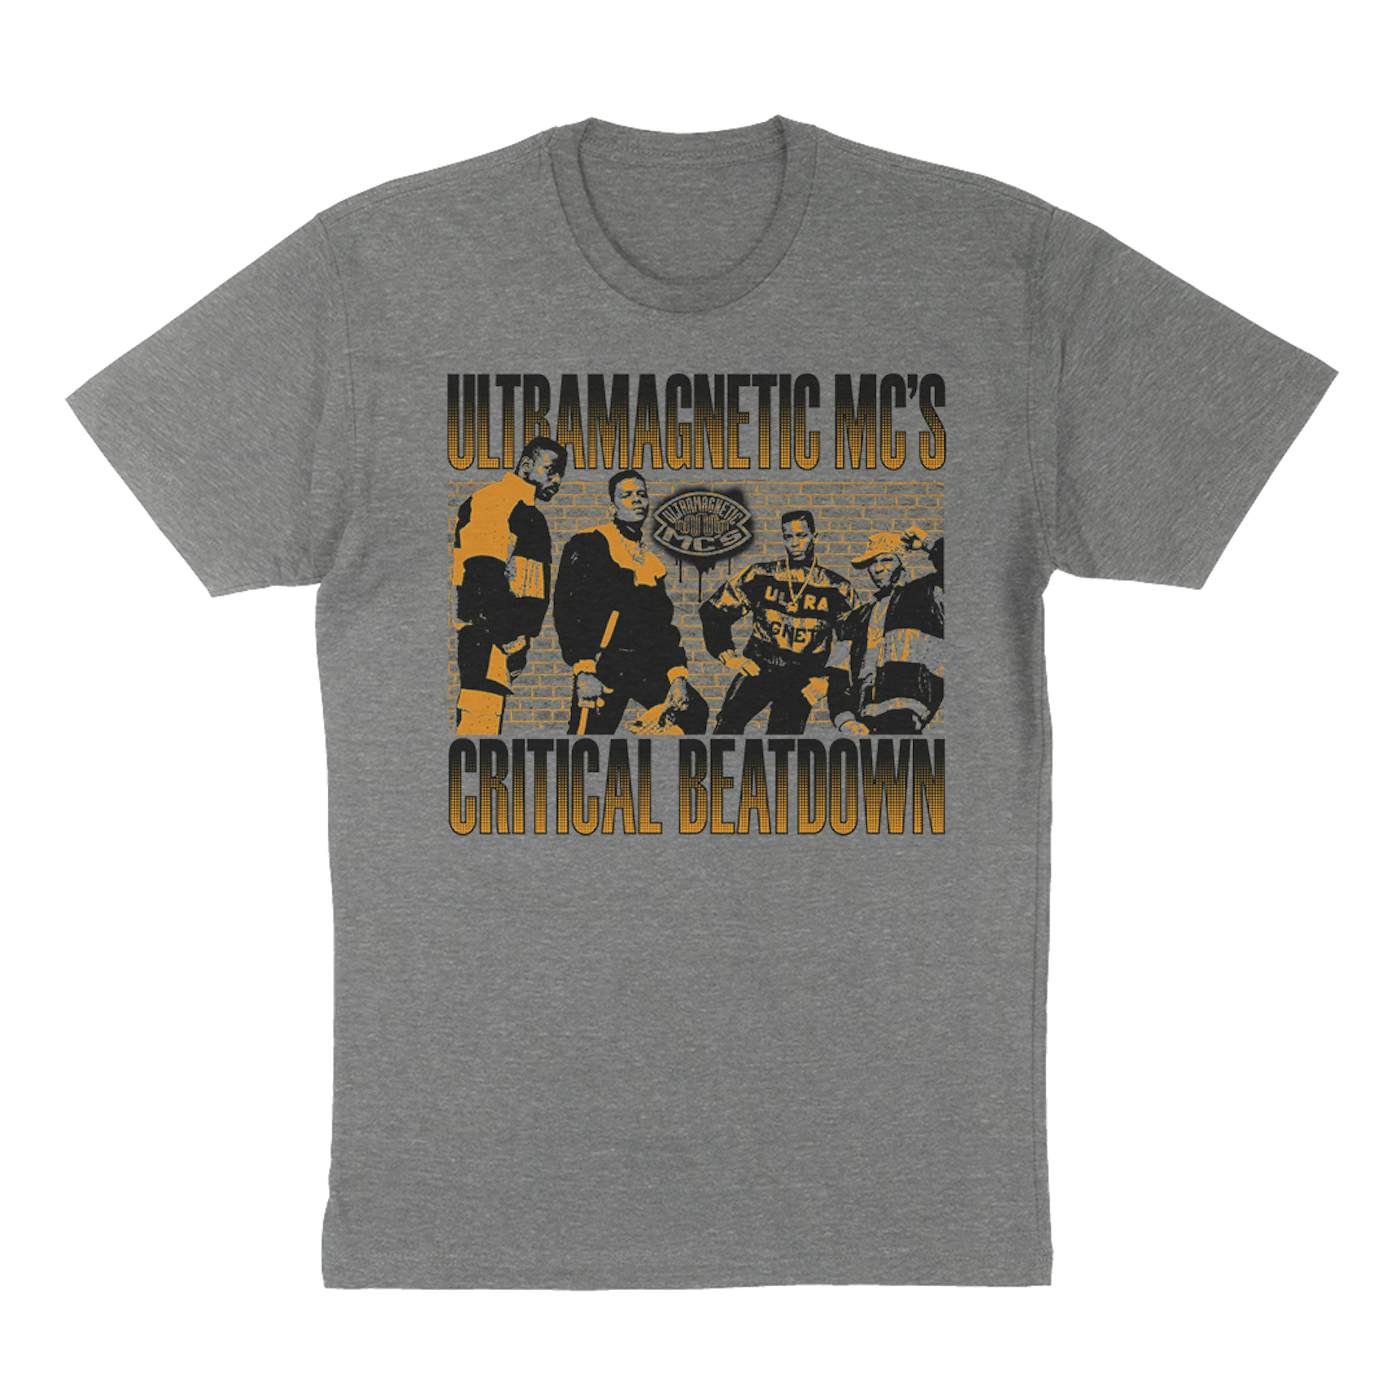 Ultramagnetic MC's "Critical Beatdown" T-Shirt in Heather Grey